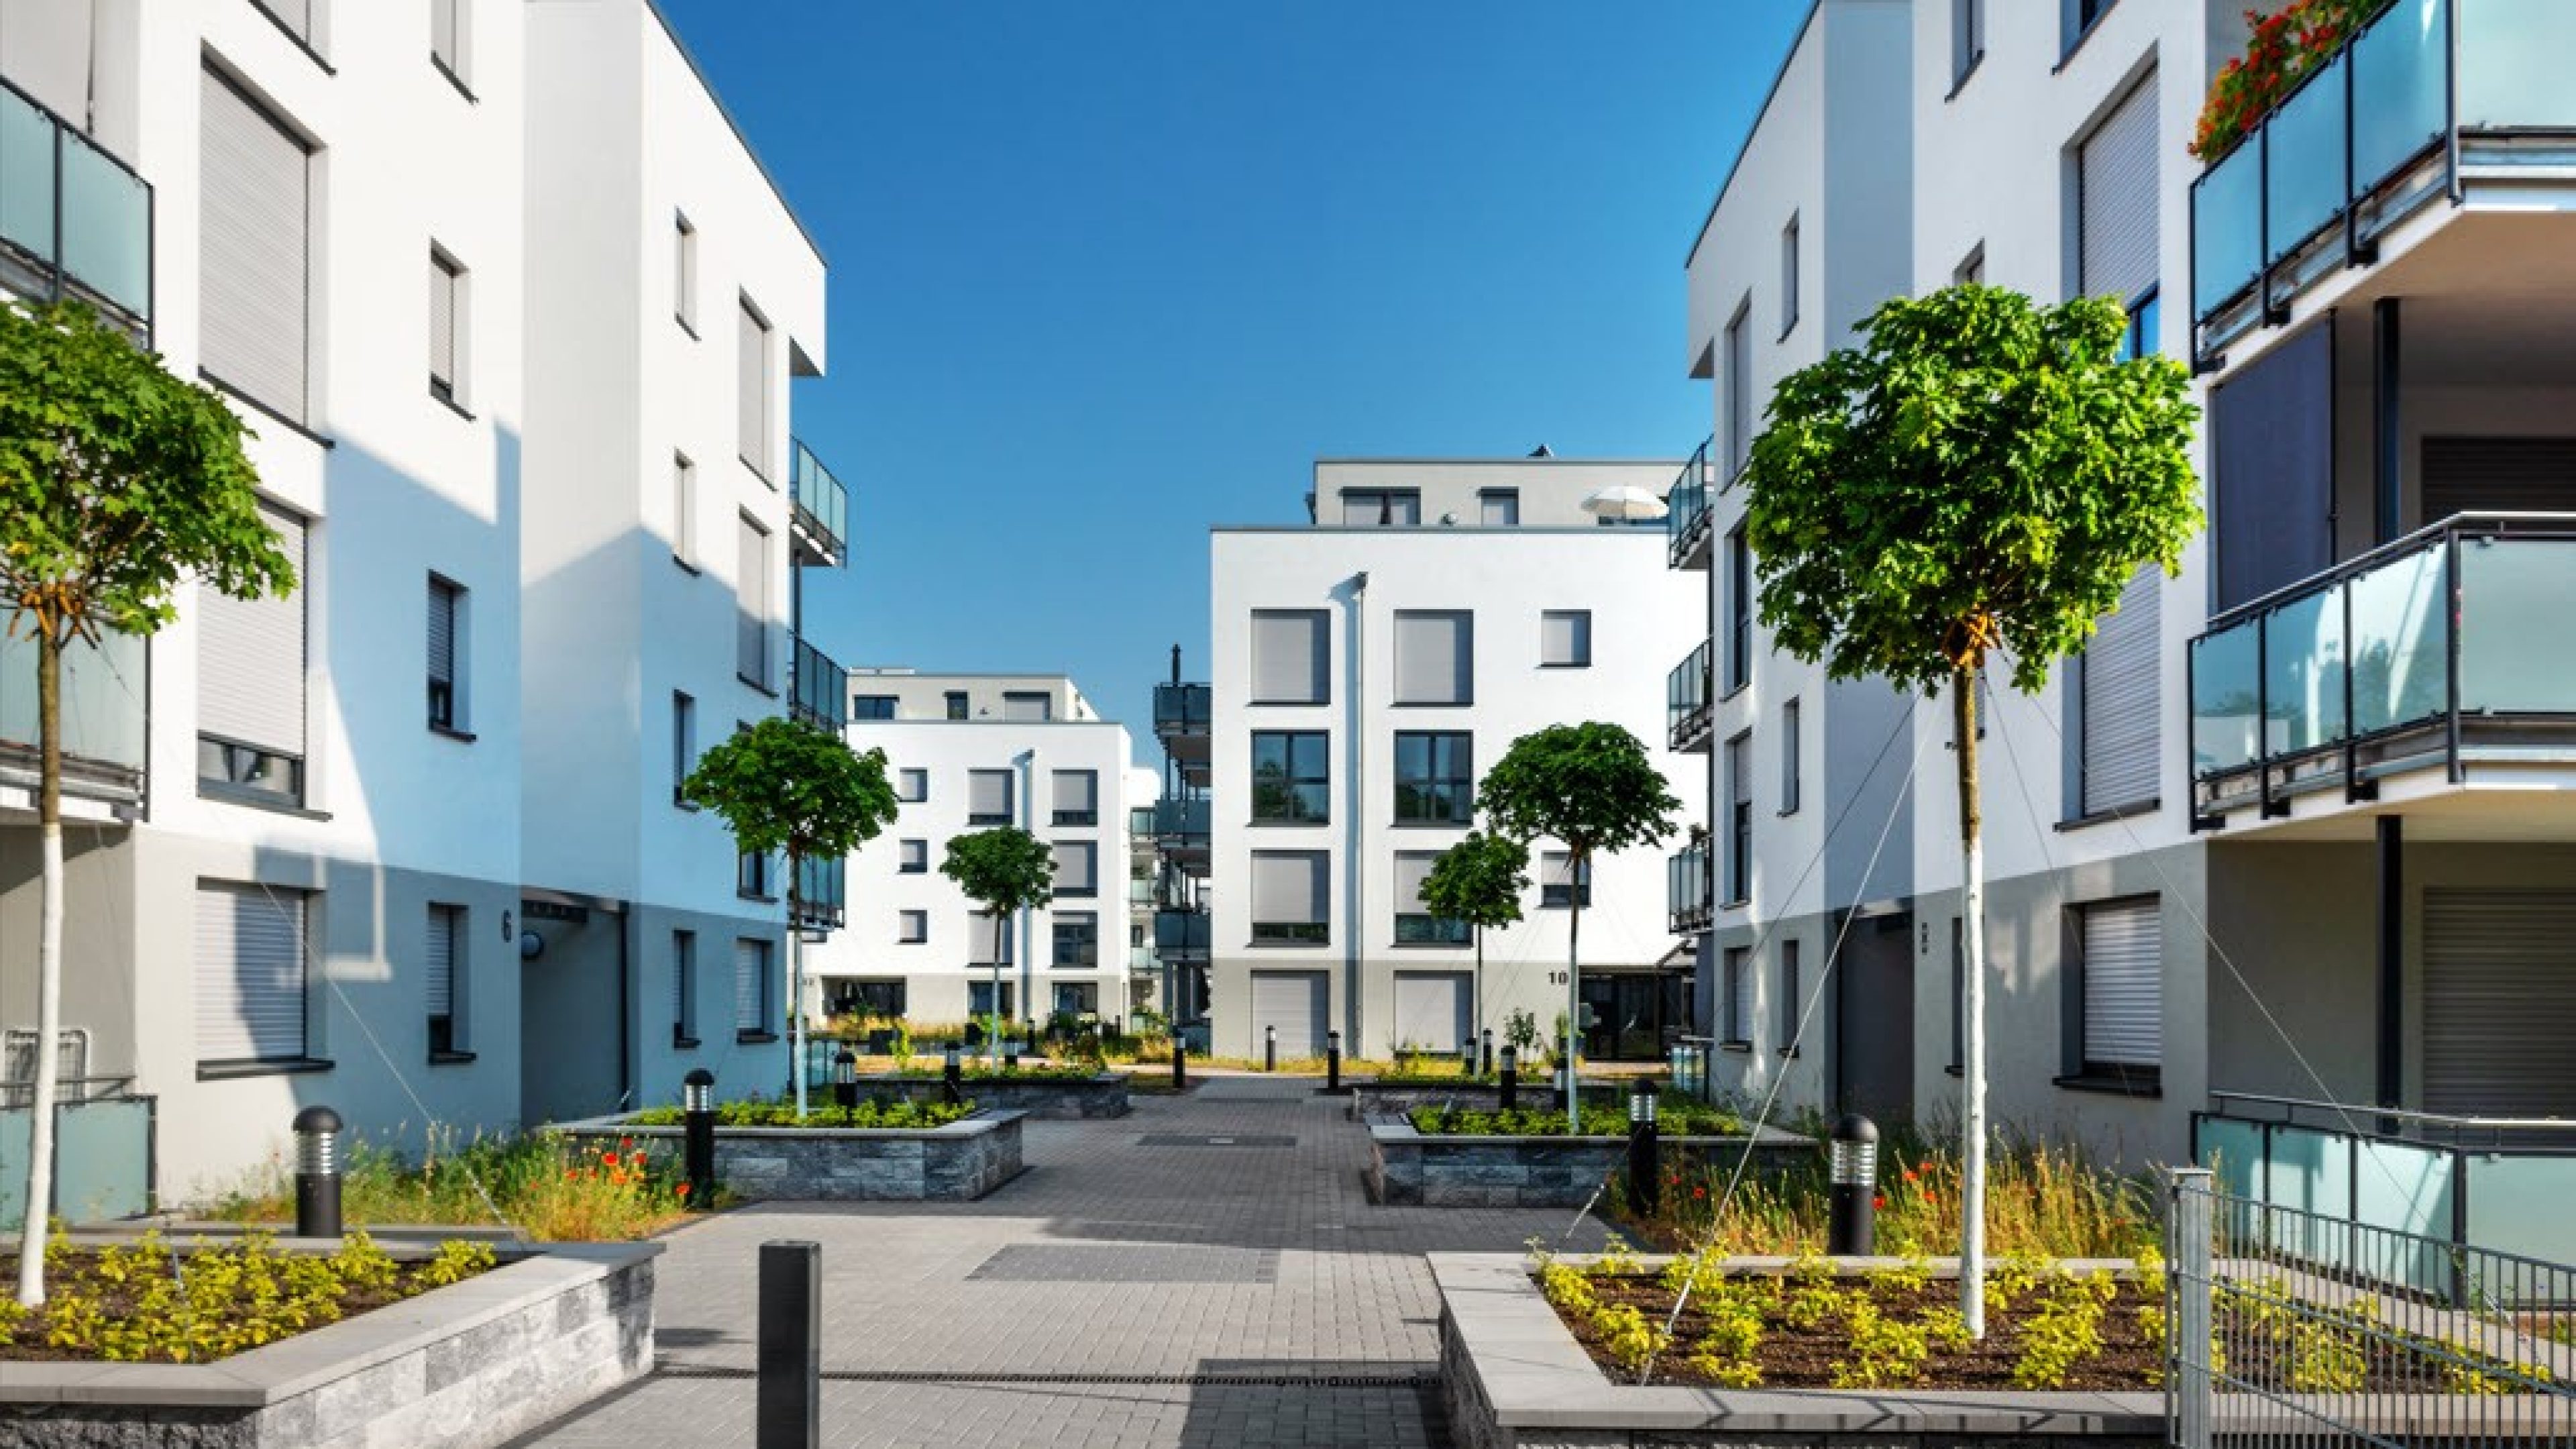 Moderne case plurifamiliari circondate da piante e cielo blu.